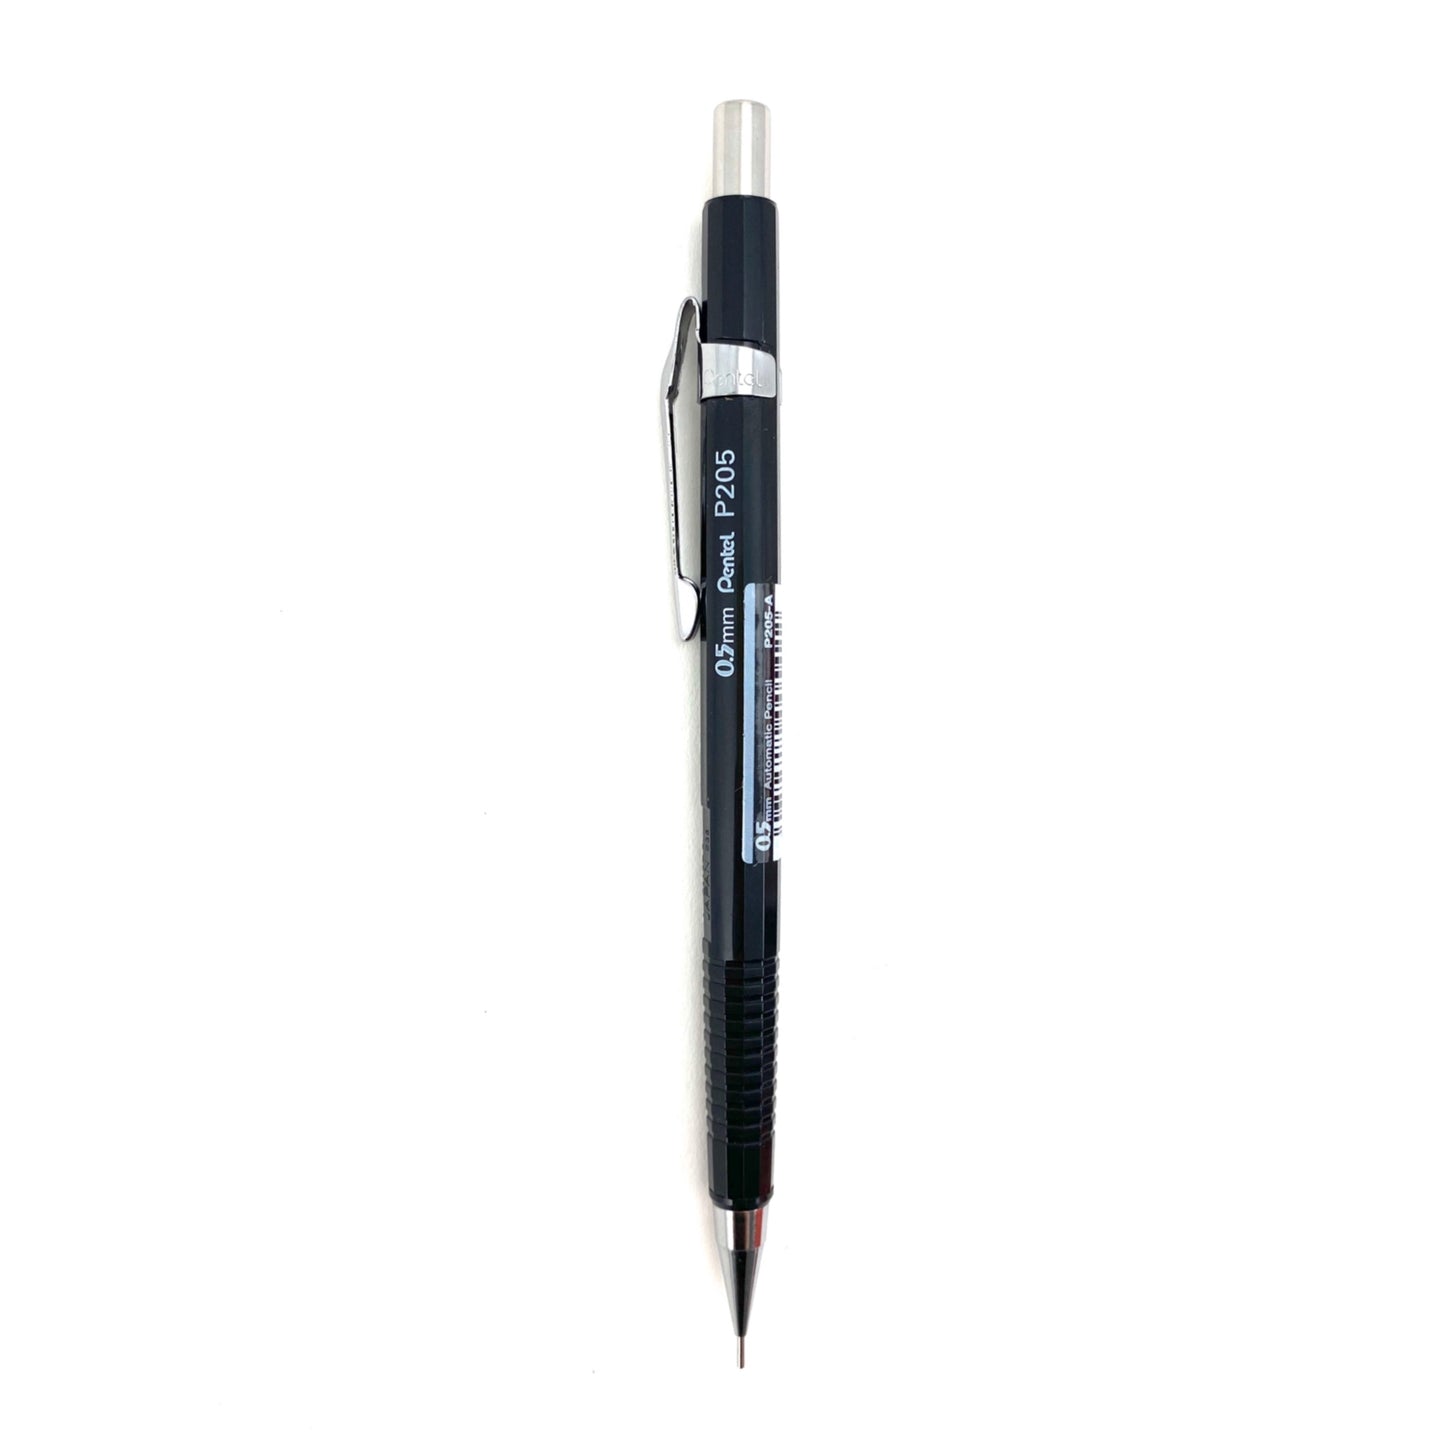 Pentel Sharp P205 0.5mm Automatic Drafting Pencils (4) NEW